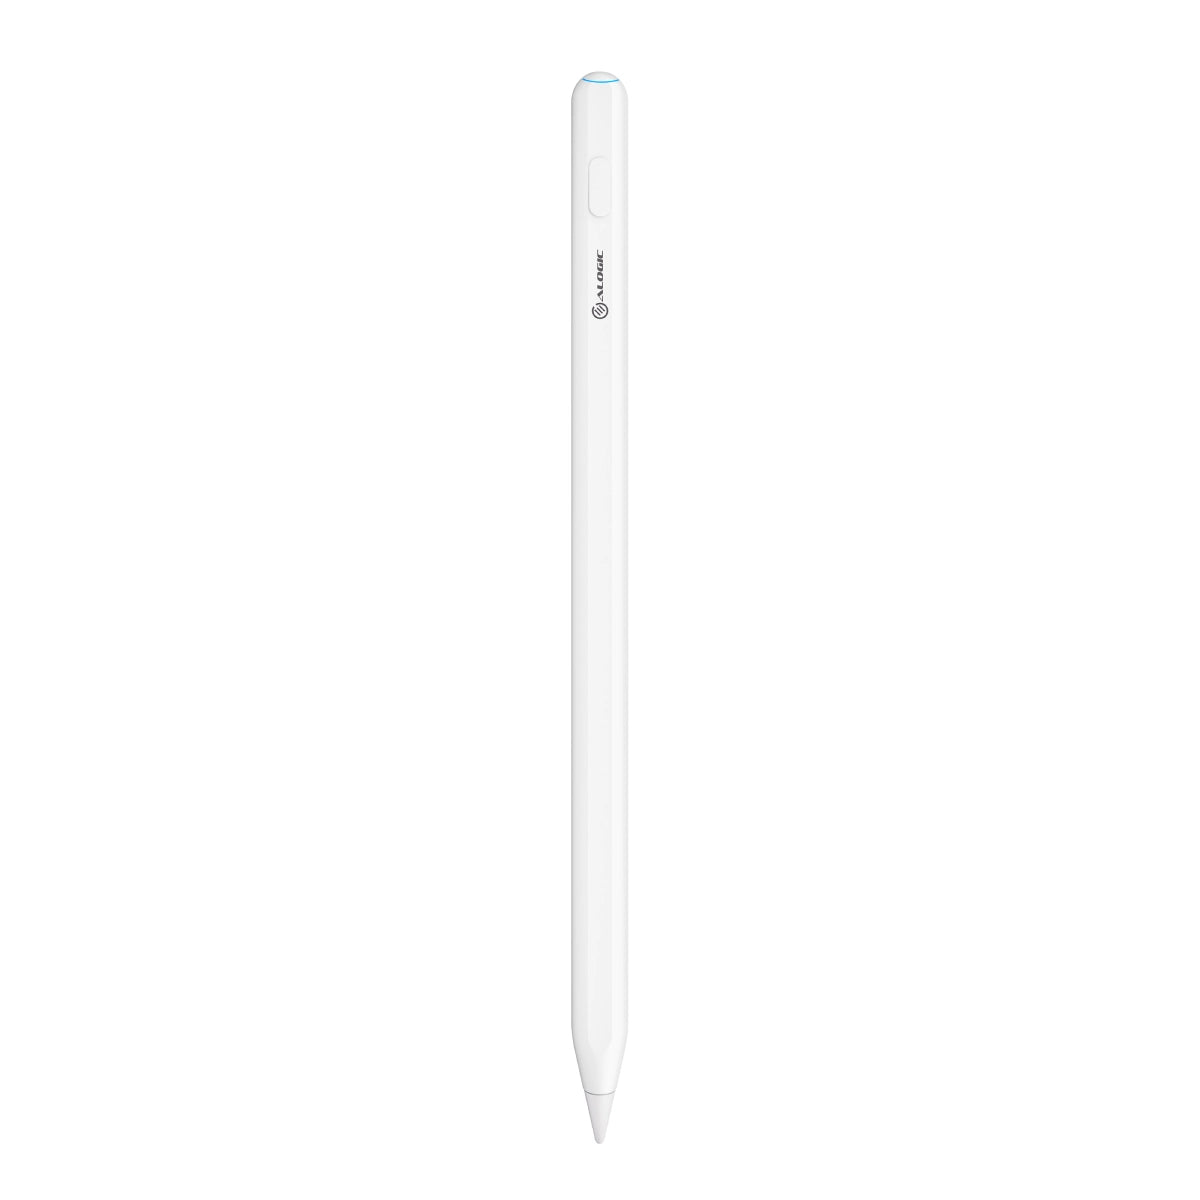 iPad Stylus Pen with Wireless Charging